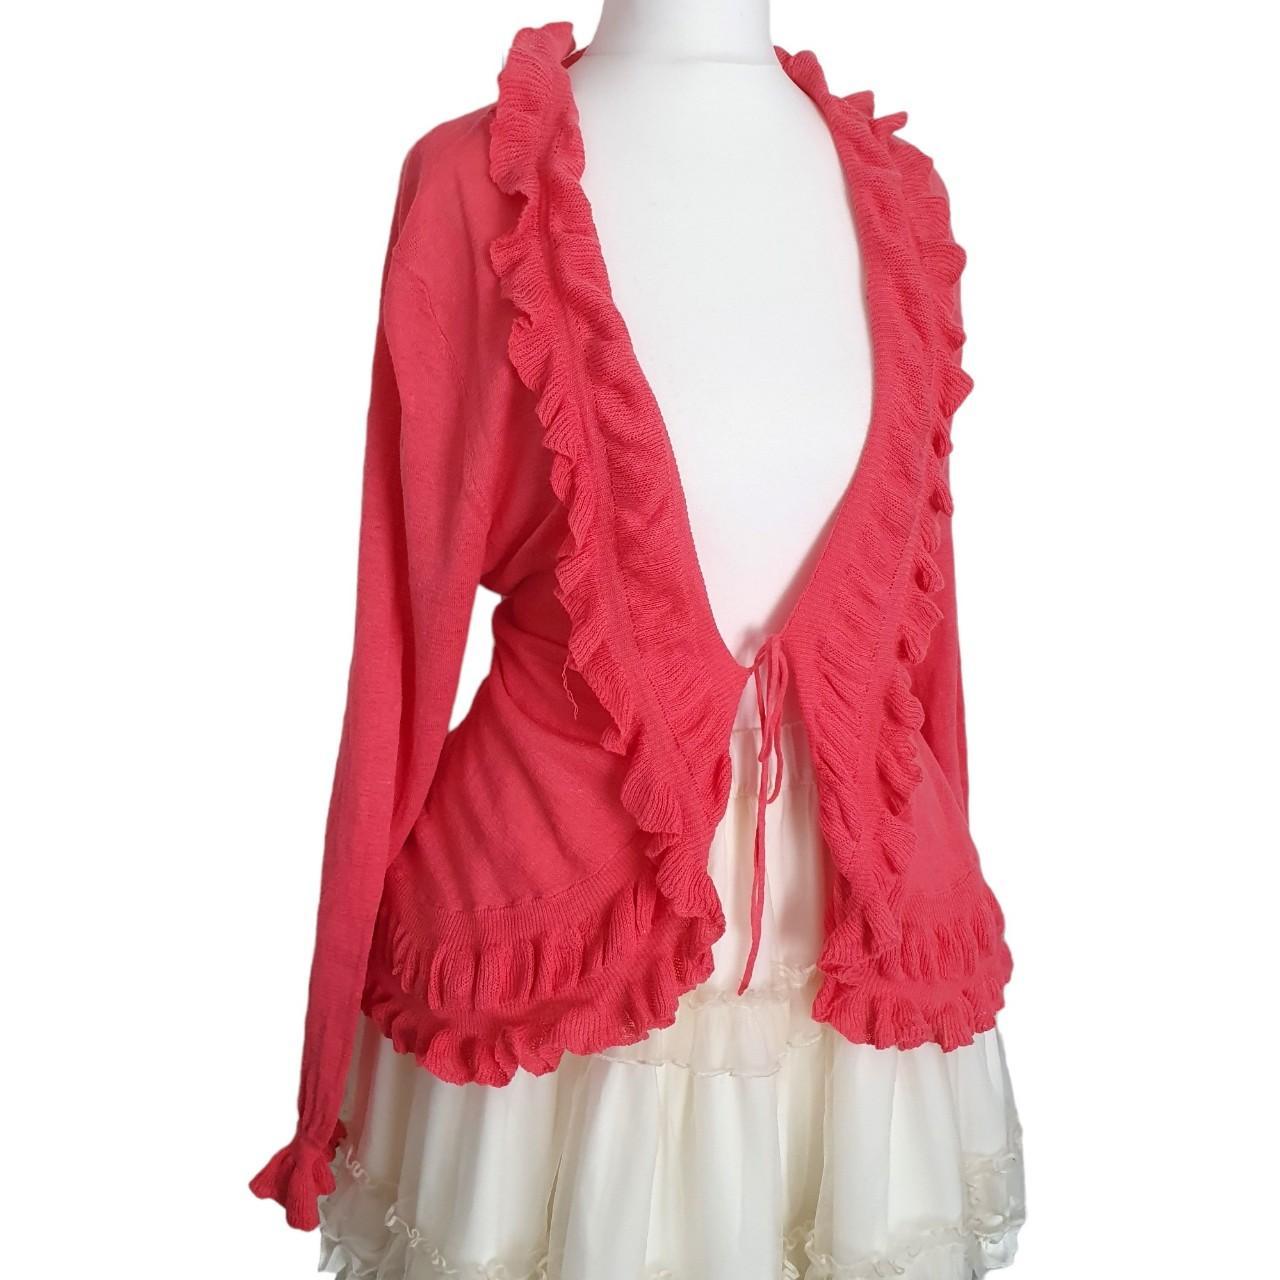 Hot Pink Ruffle Cardigan • Hot pink long sleeve... - Depop